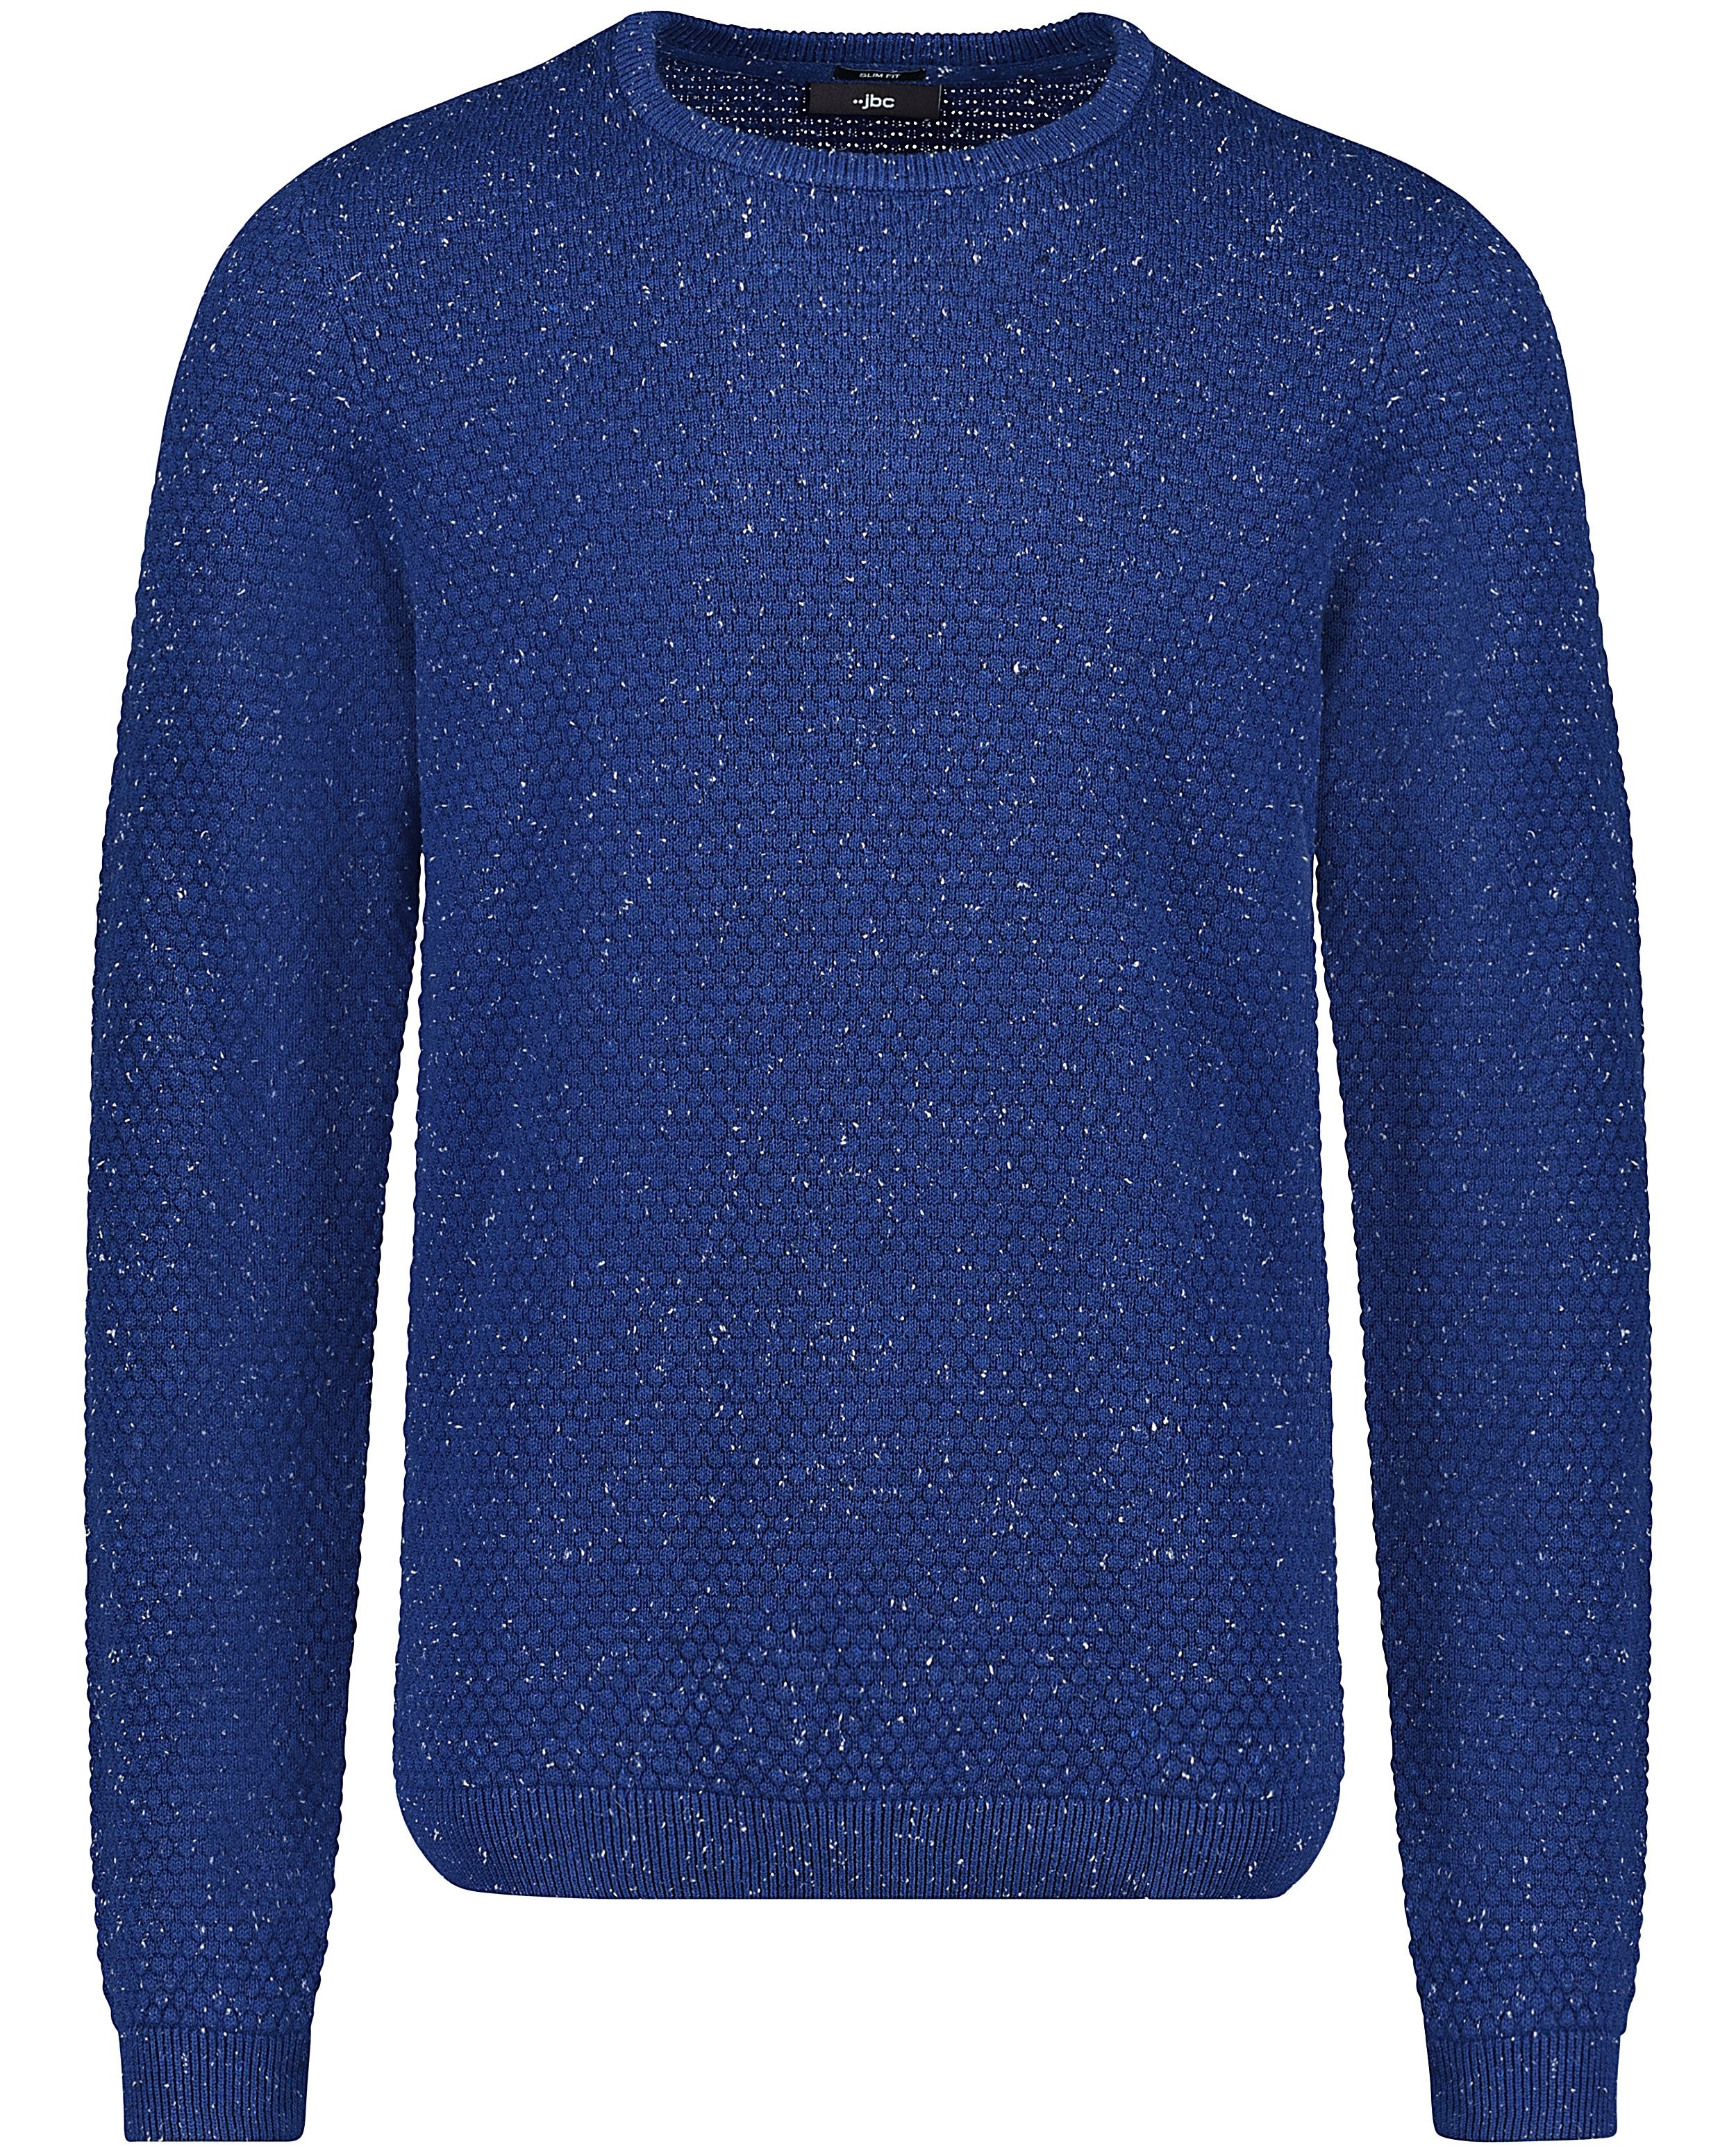 Blauwe sweater - met spikkels - JBC